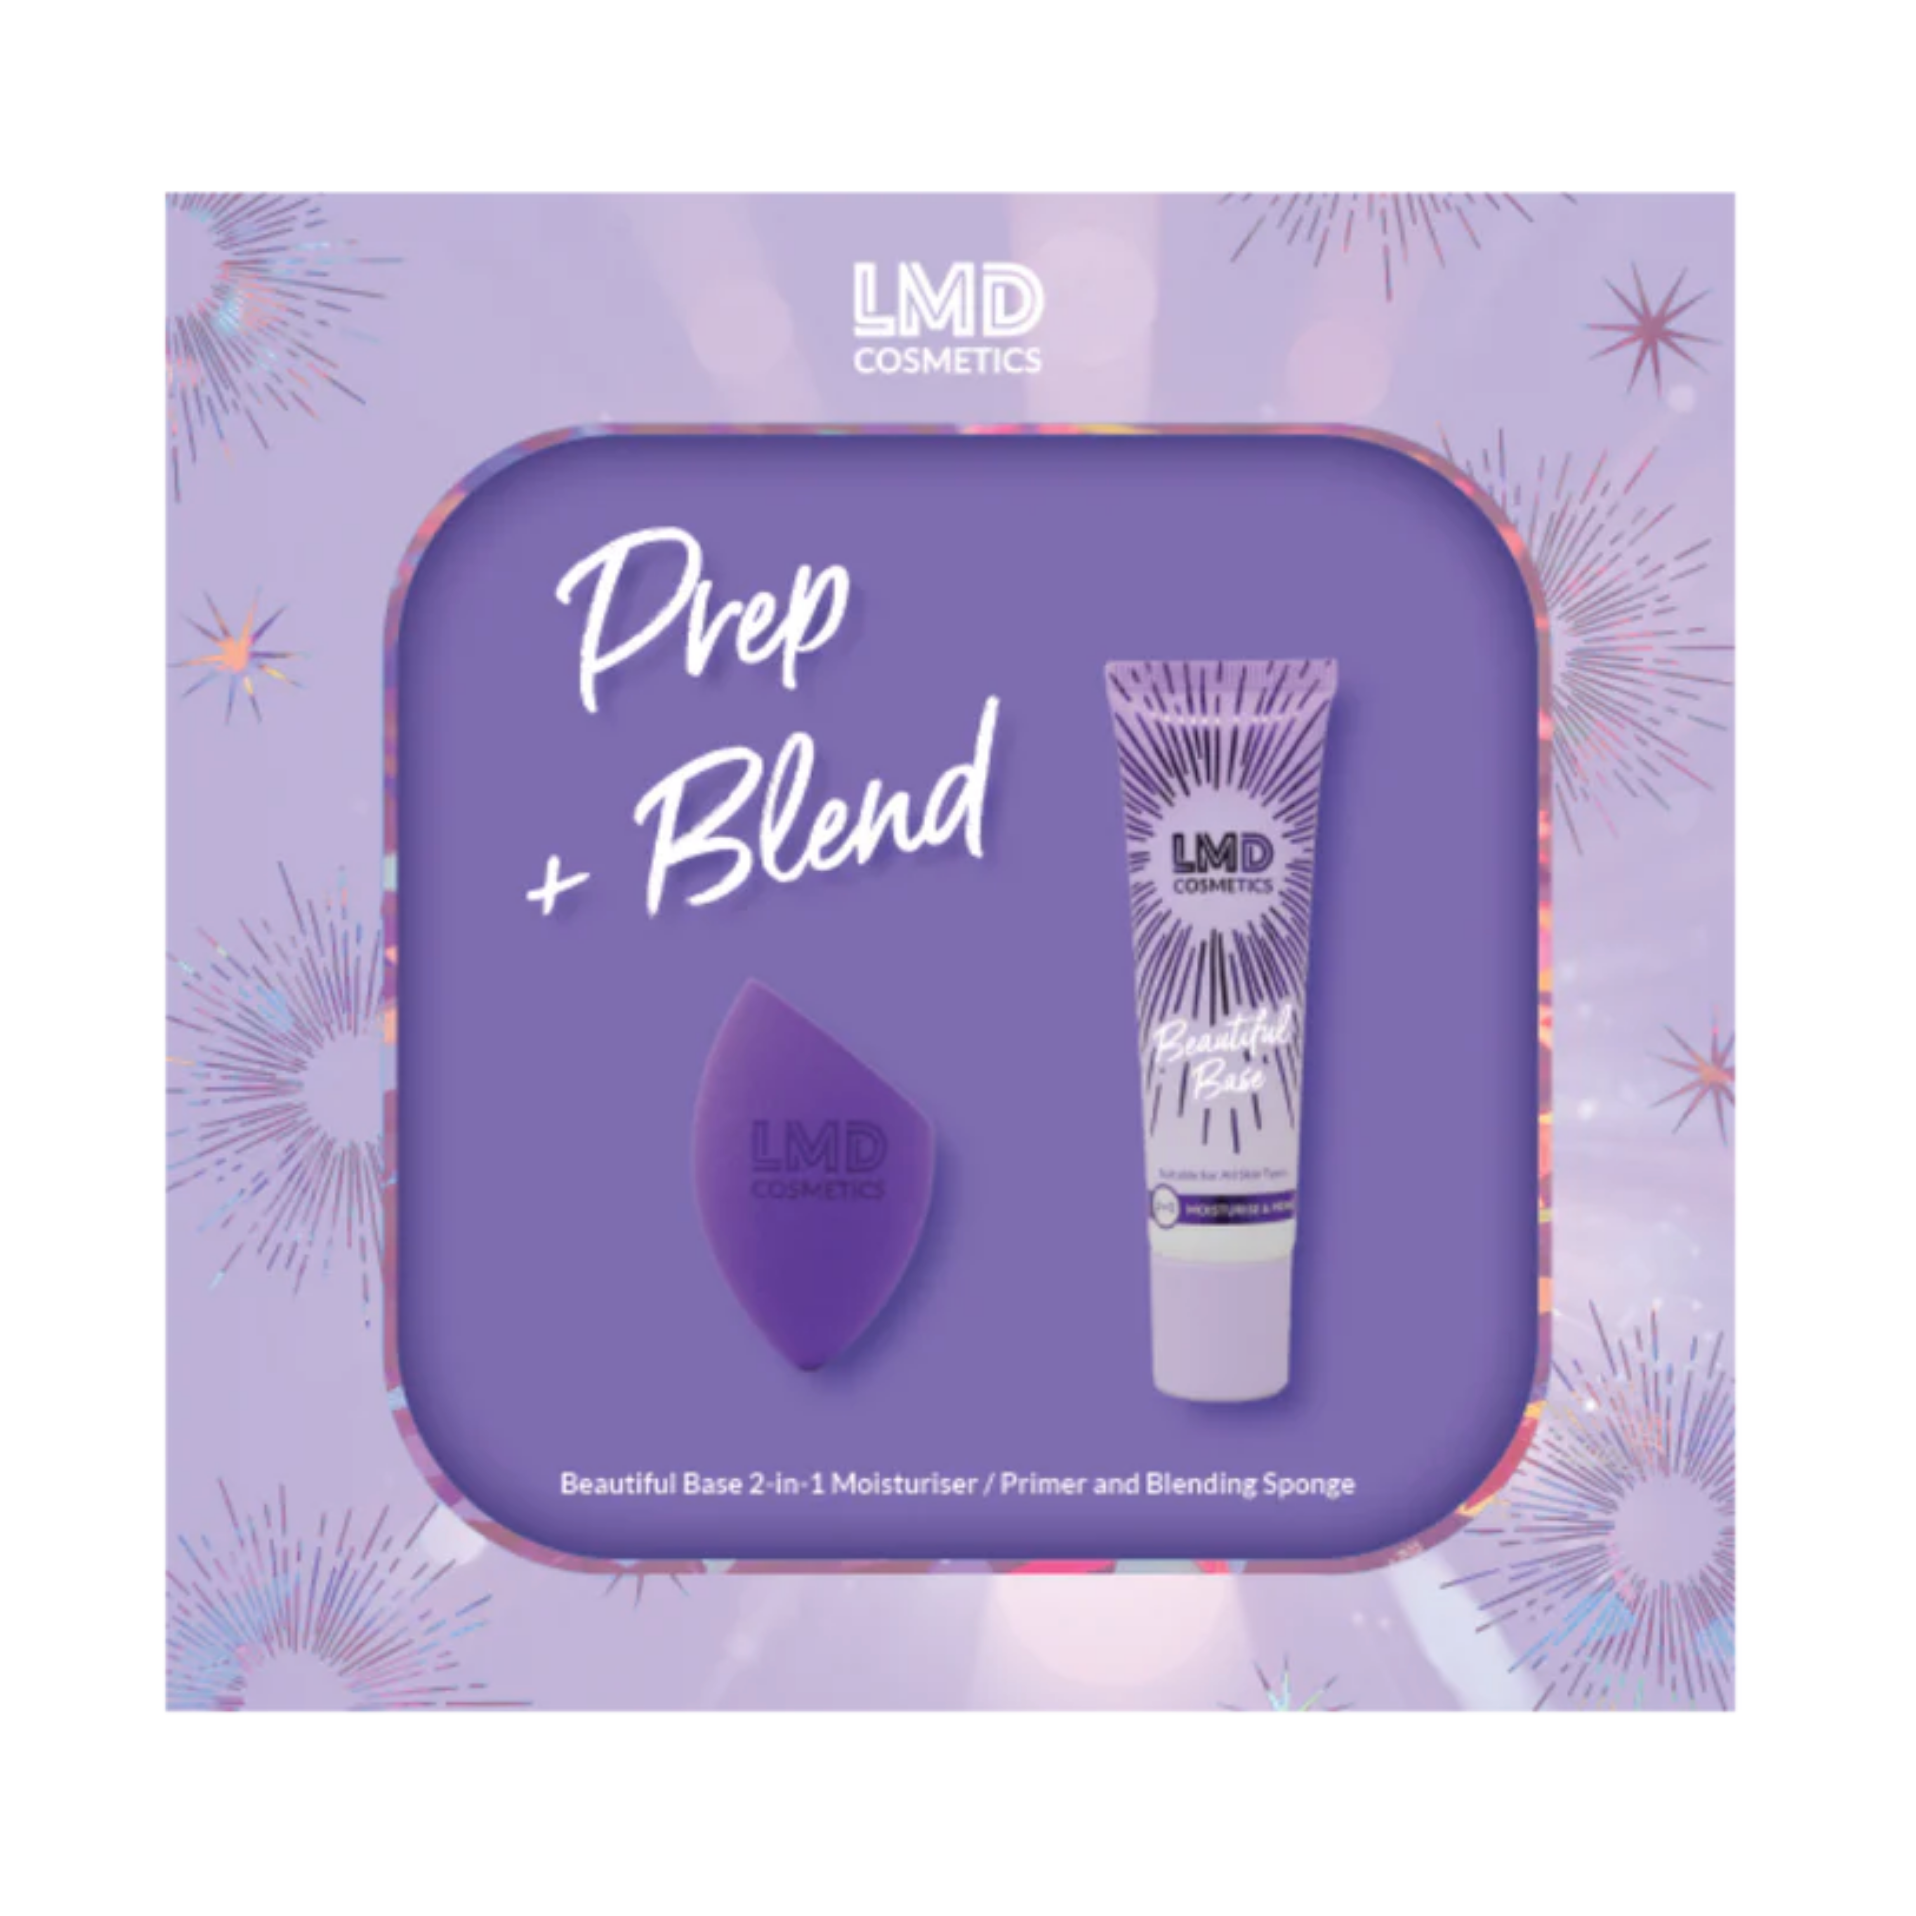 LMD Cosmetics Prep & Blend gift set